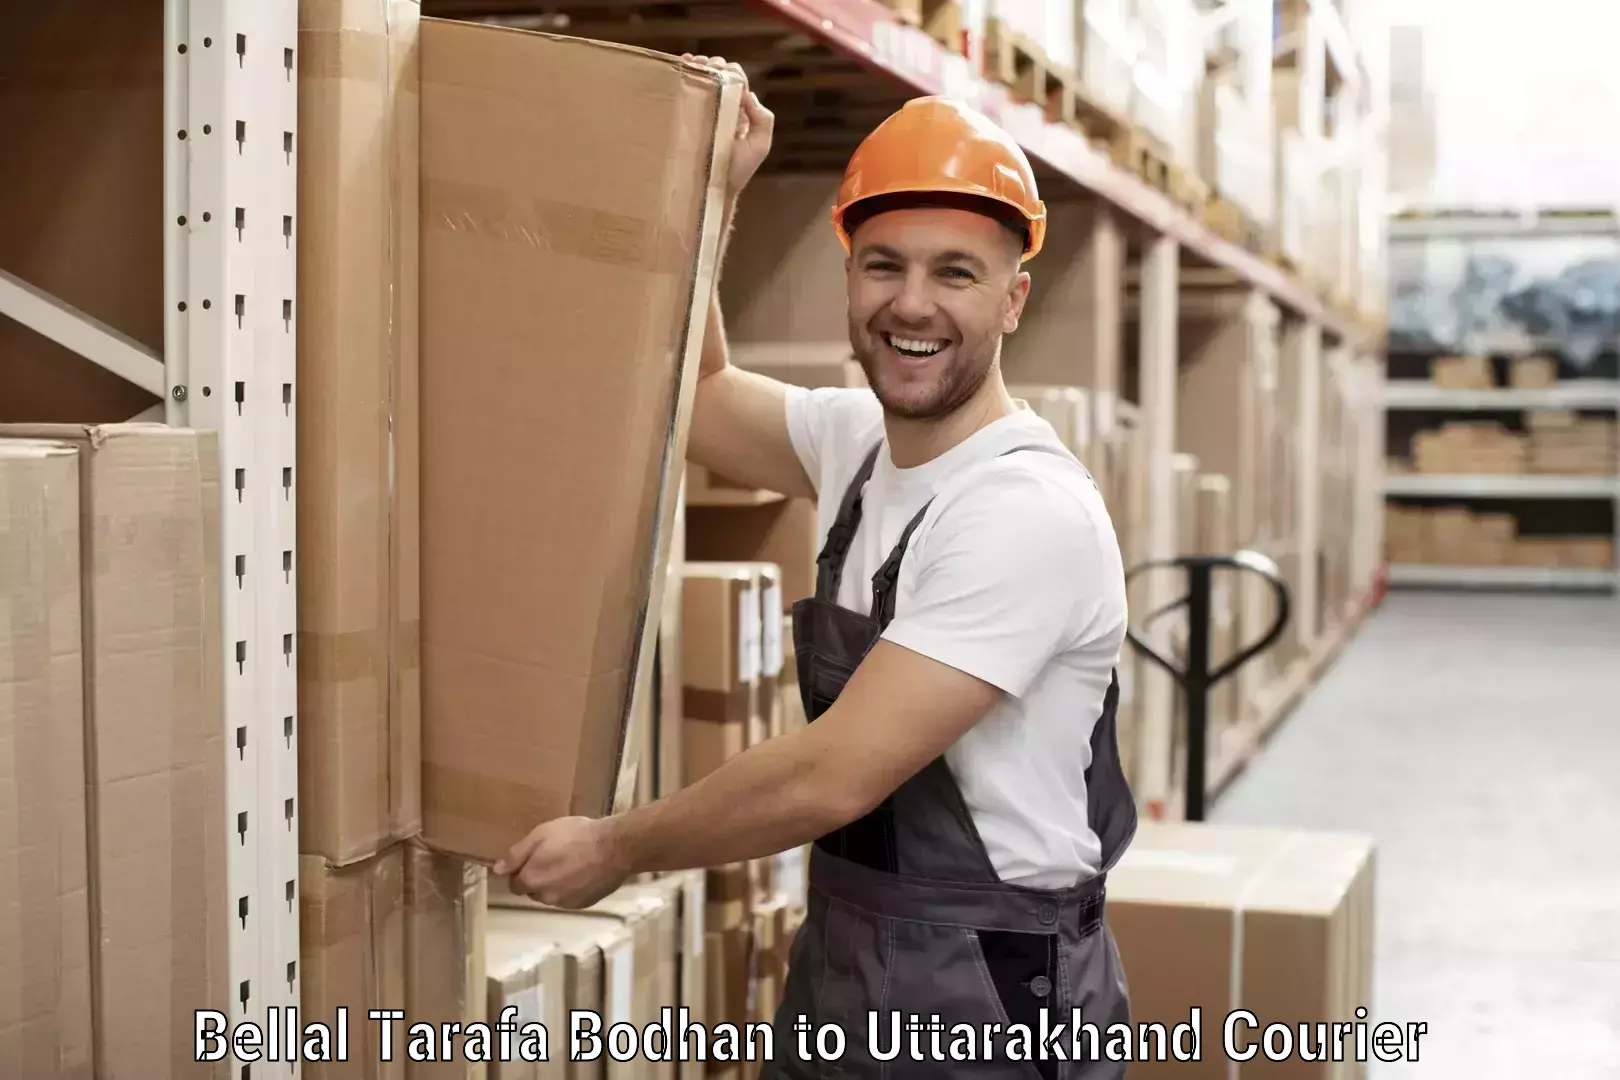 Efficient parcel service Bellal Tarafa Bodhan to Uttarakhand